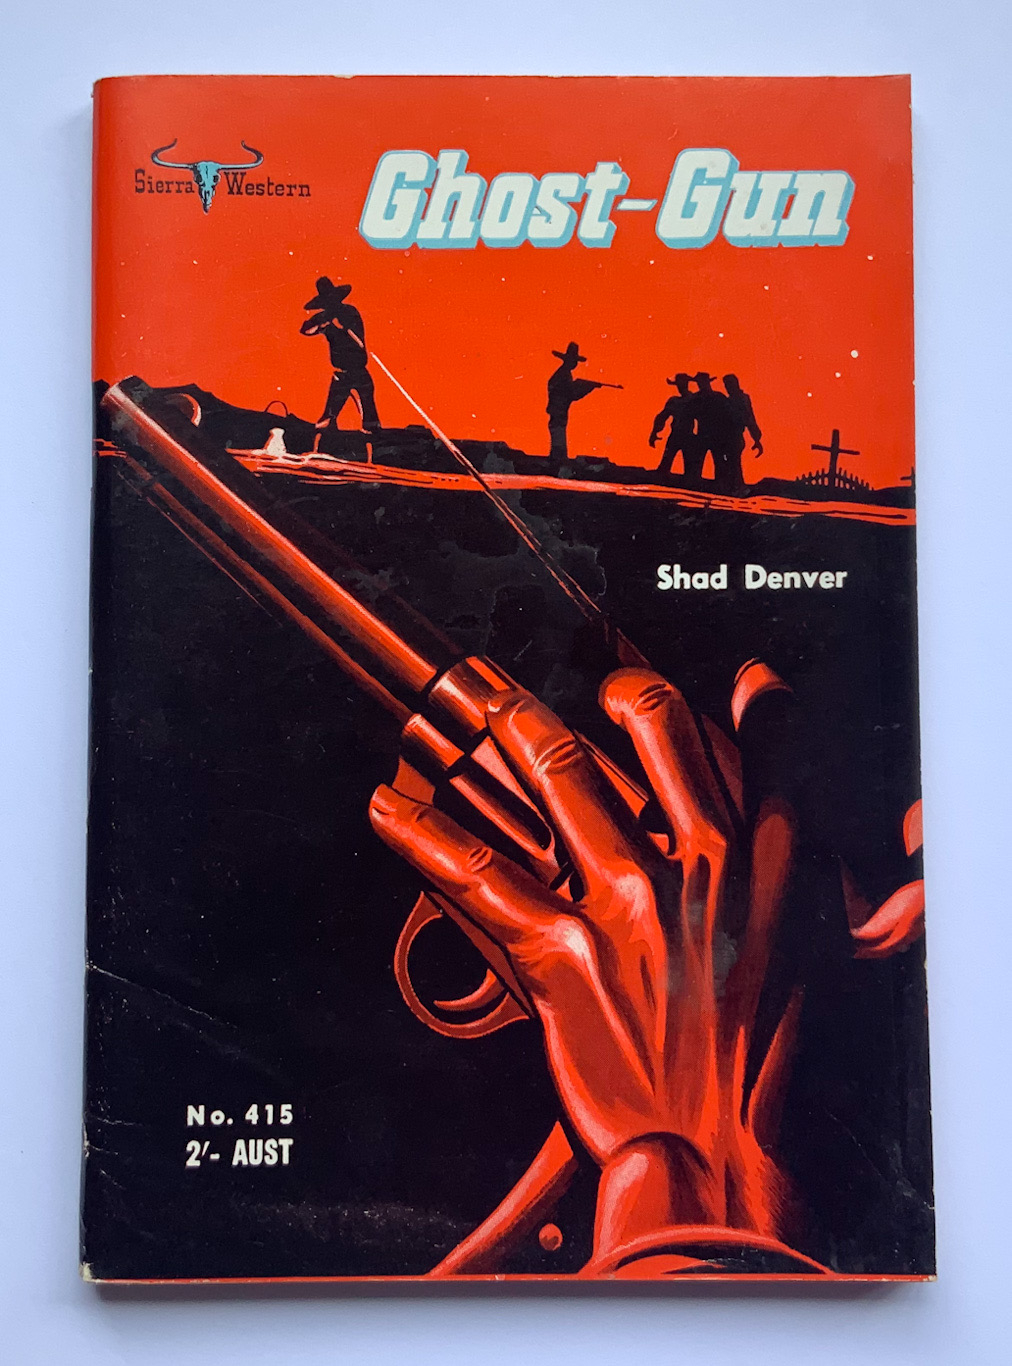 GHOST GUN Australian Western pulp fiction book 1950s-60s